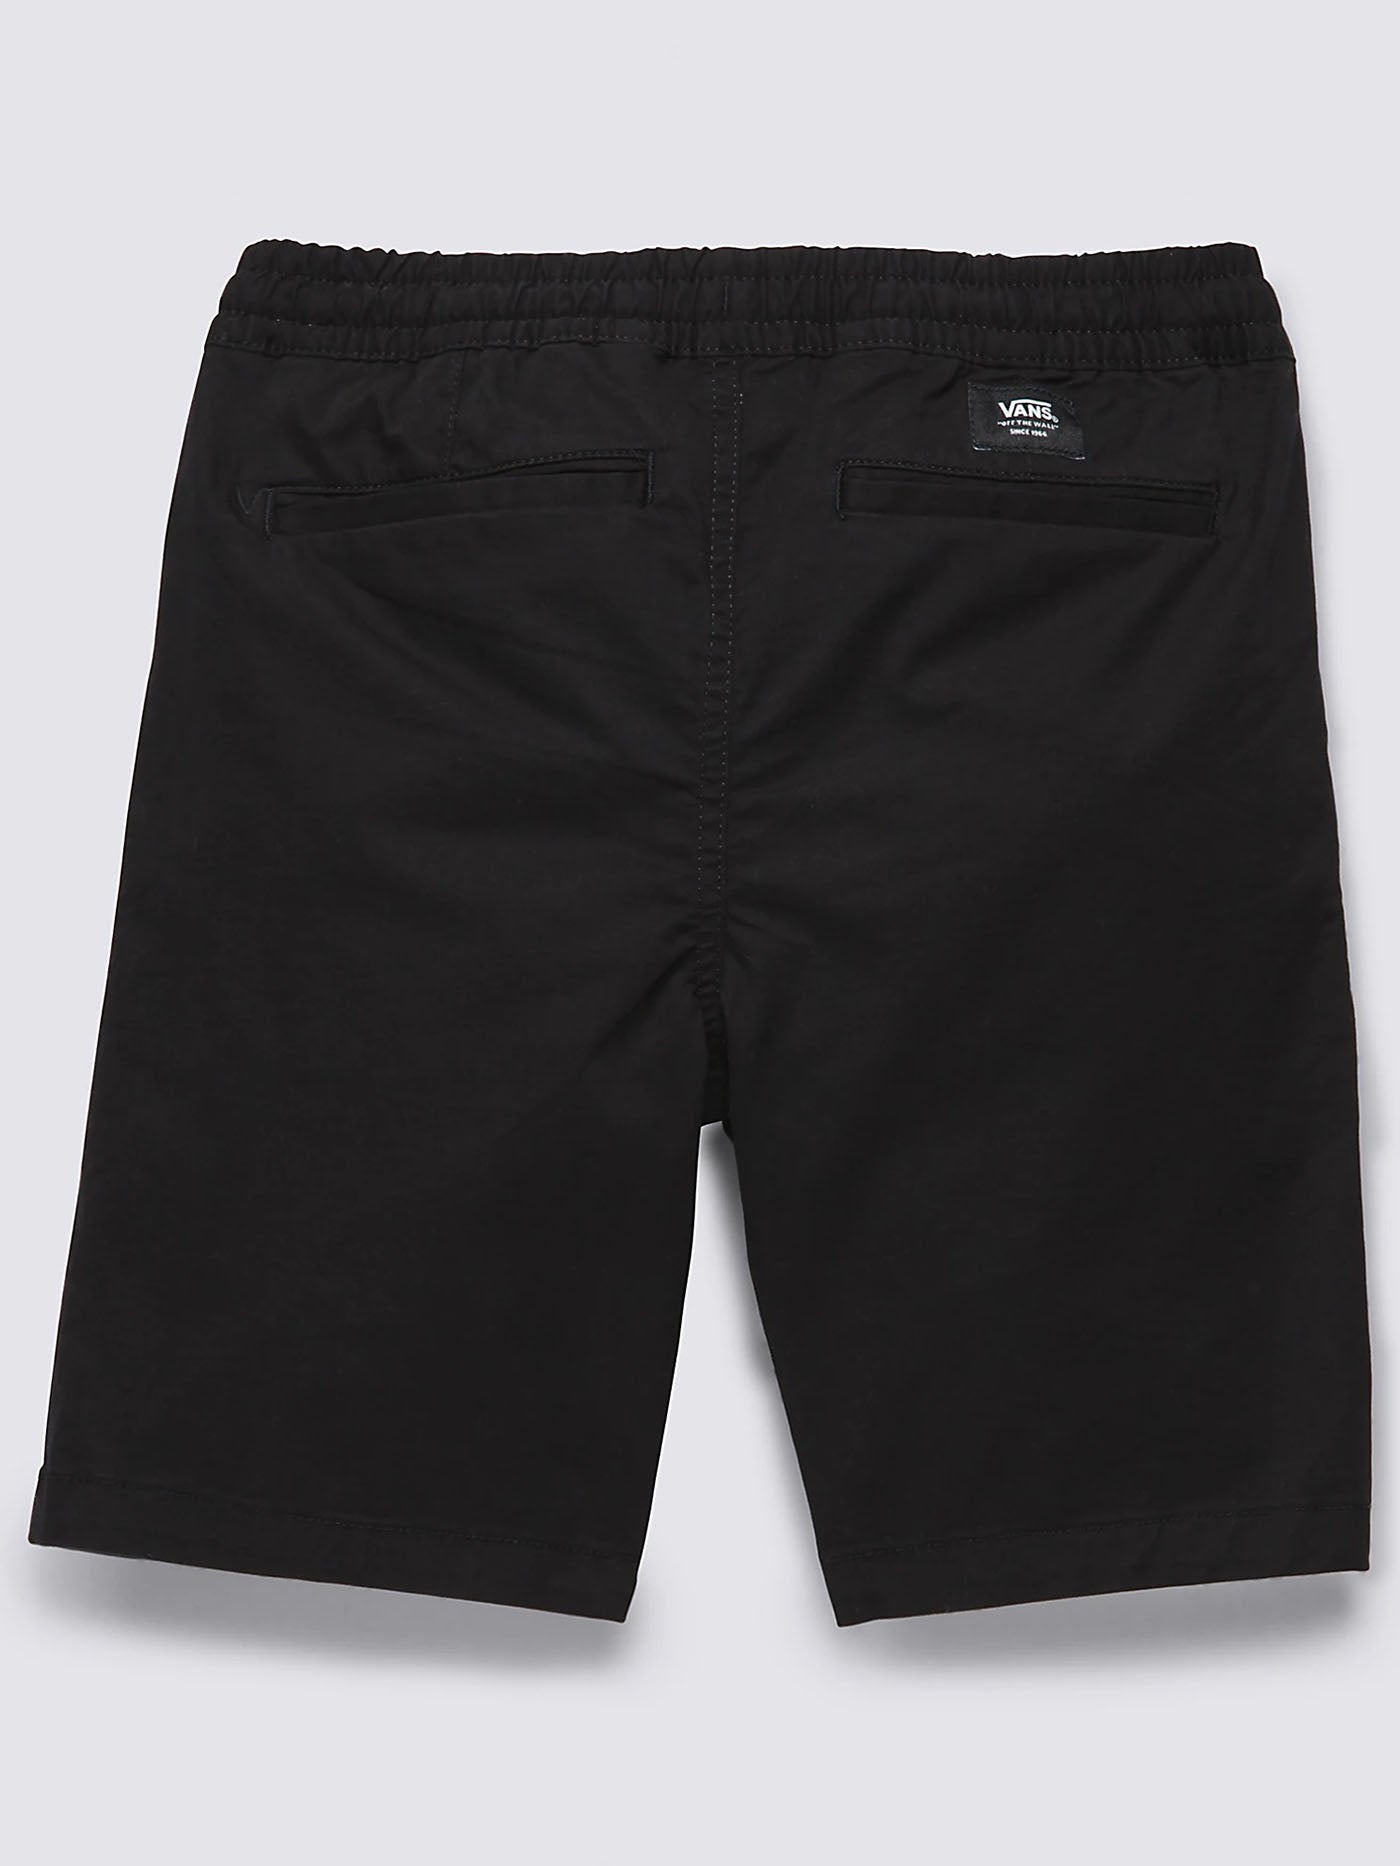 Range Elastic II Shorts (Boys 7-14)